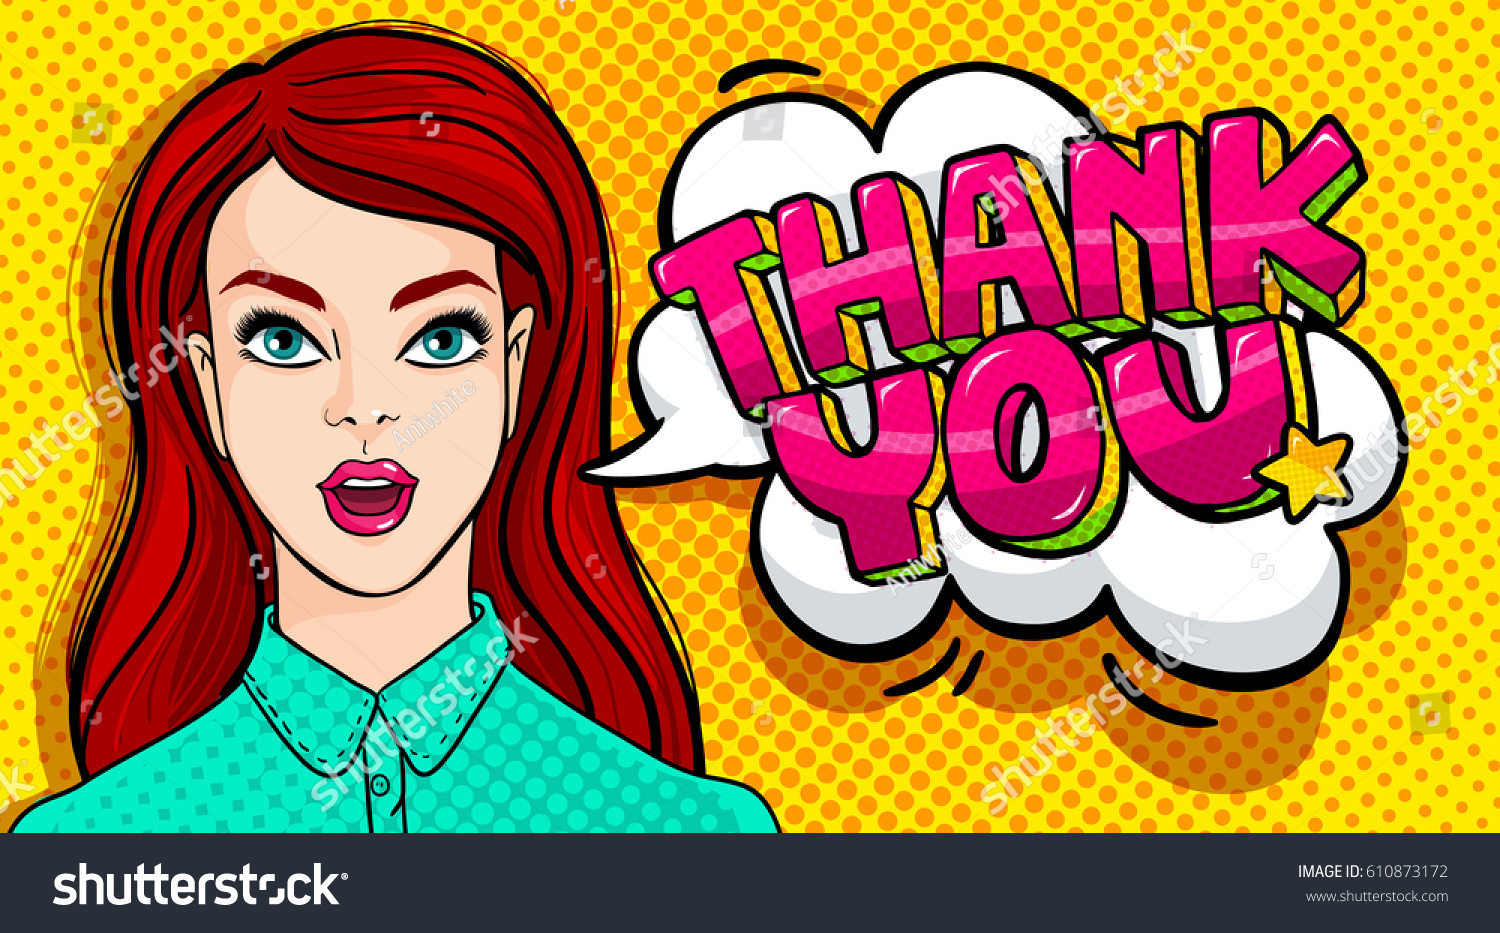 Thank You Message Beautiful Young Woman เวกเตอร์สต็อก ปลอดค่าลิขสิทธิ์ 610873172 Shutterstock